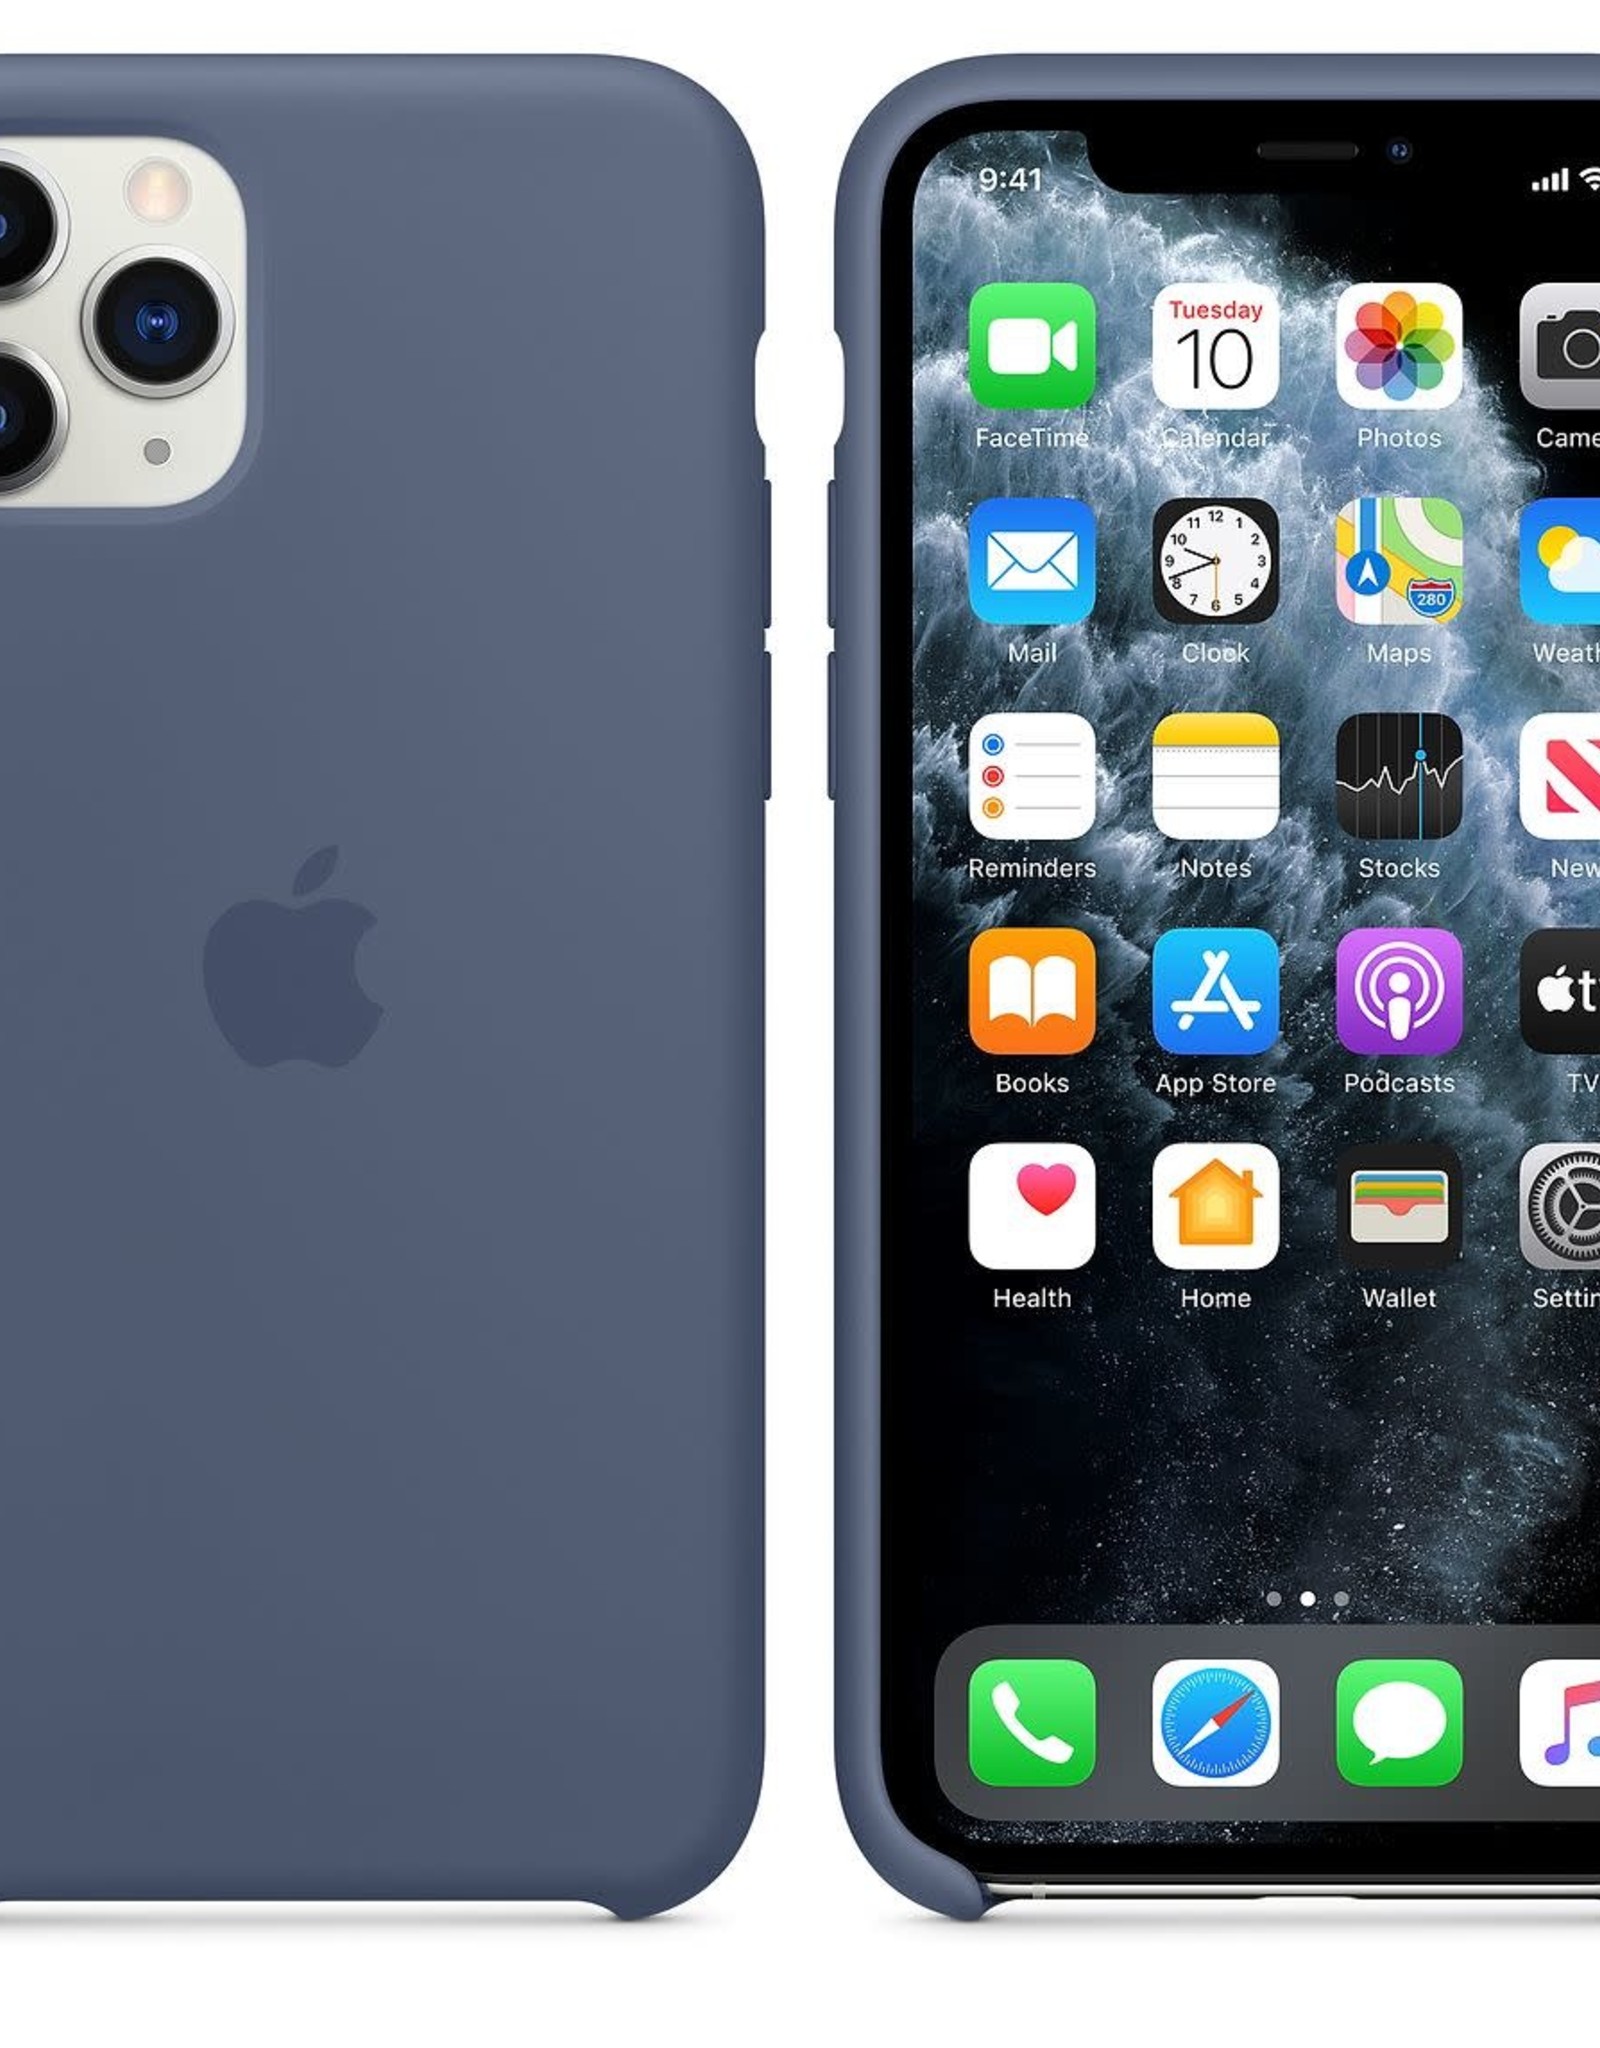 Apple Alaskan Blue iPhone Silicone Case